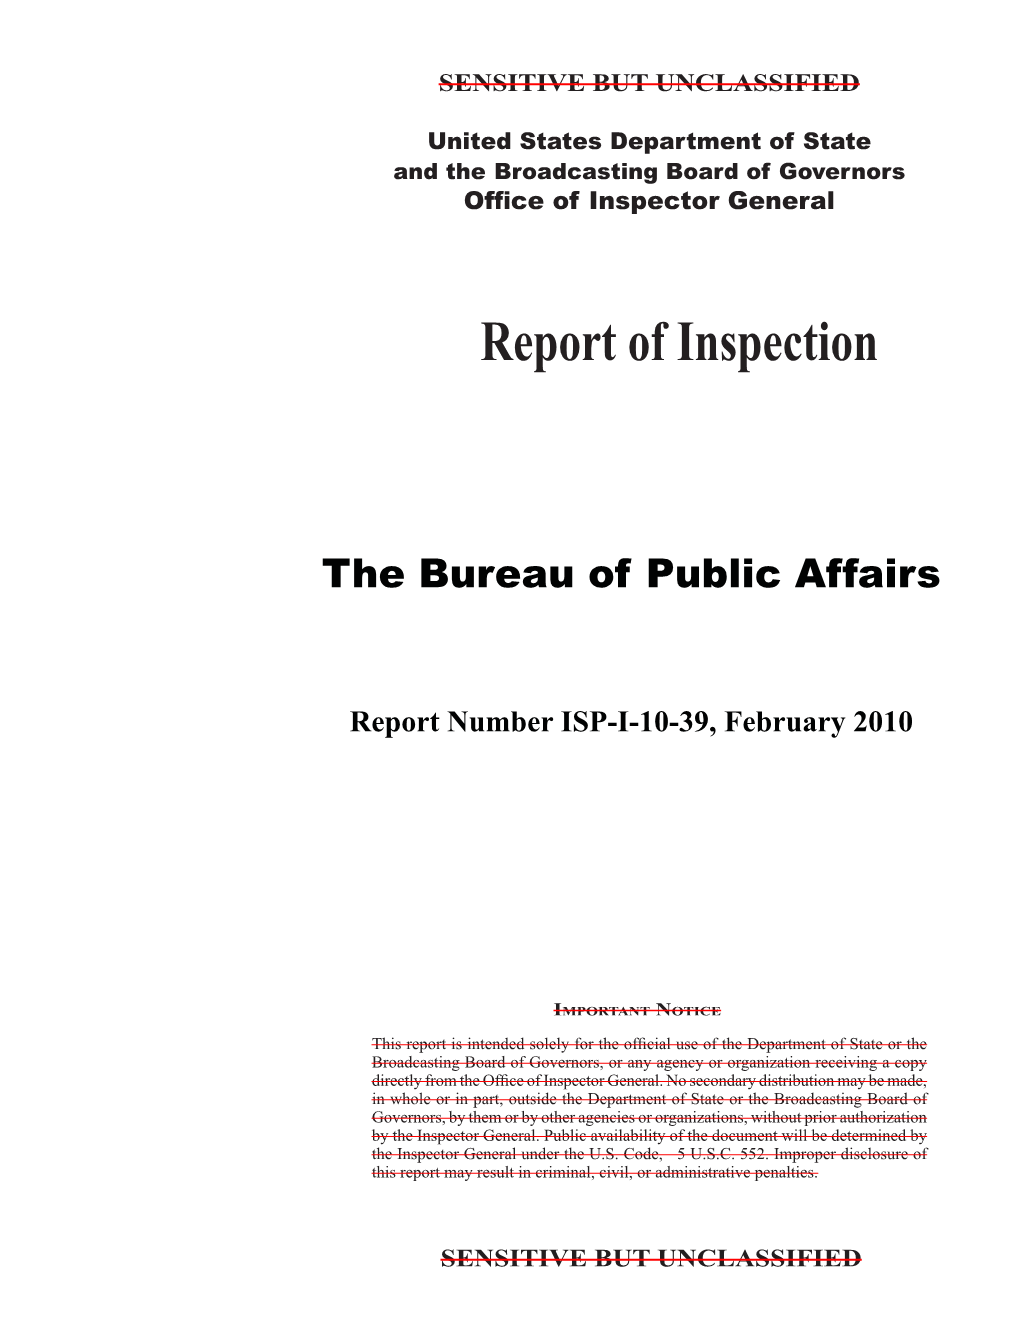 Report of Inspection: the Bureau of Public Affairs